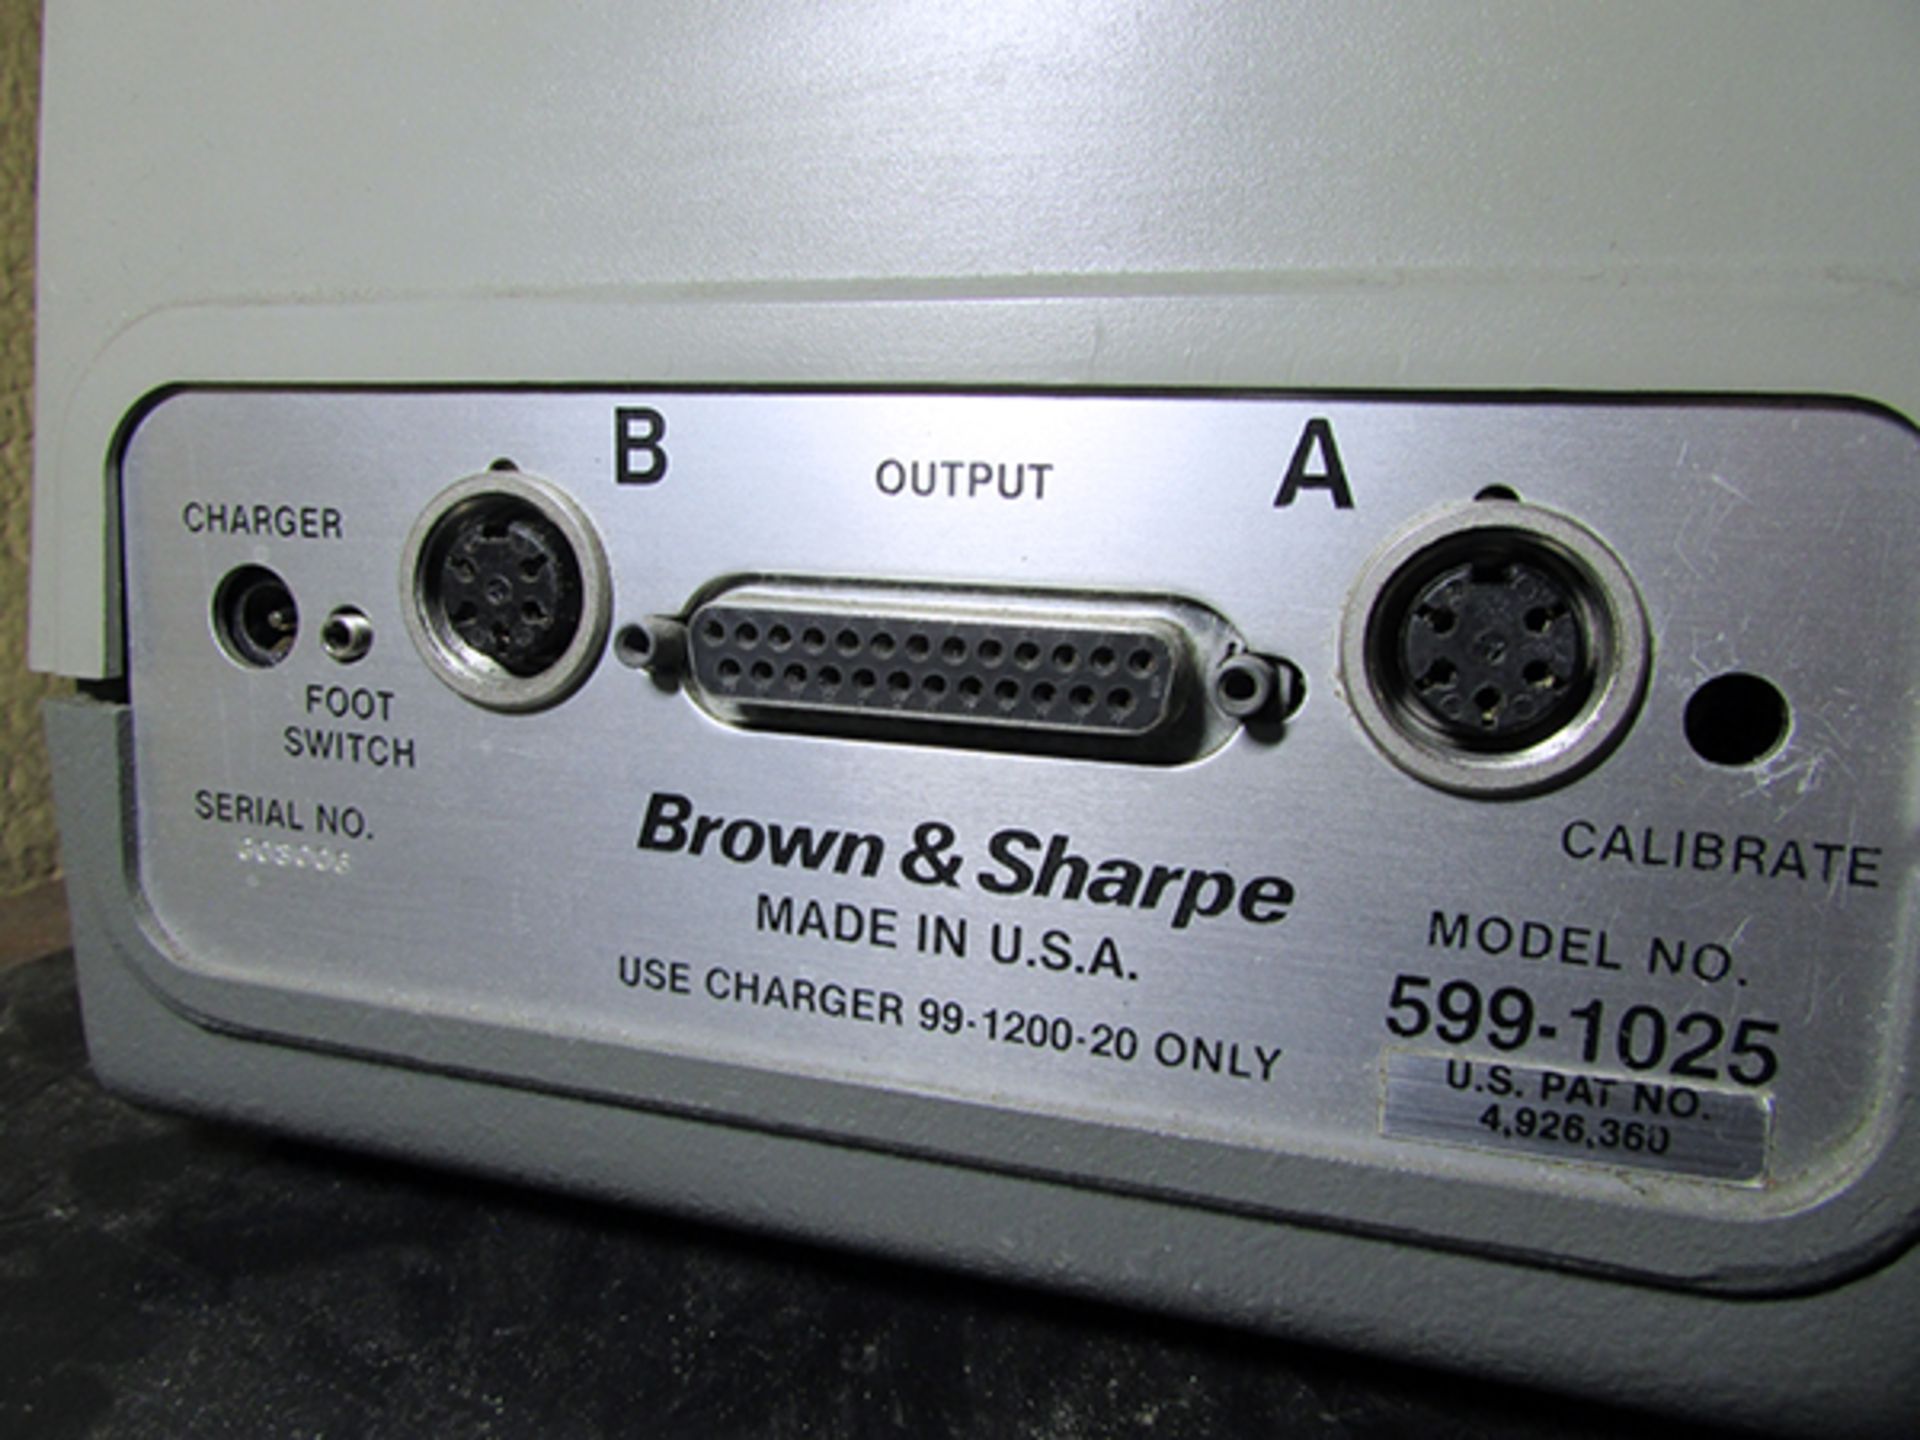 Brown & Sharpe 1025 Digital Indicator Display Unit - Image 6 of 6